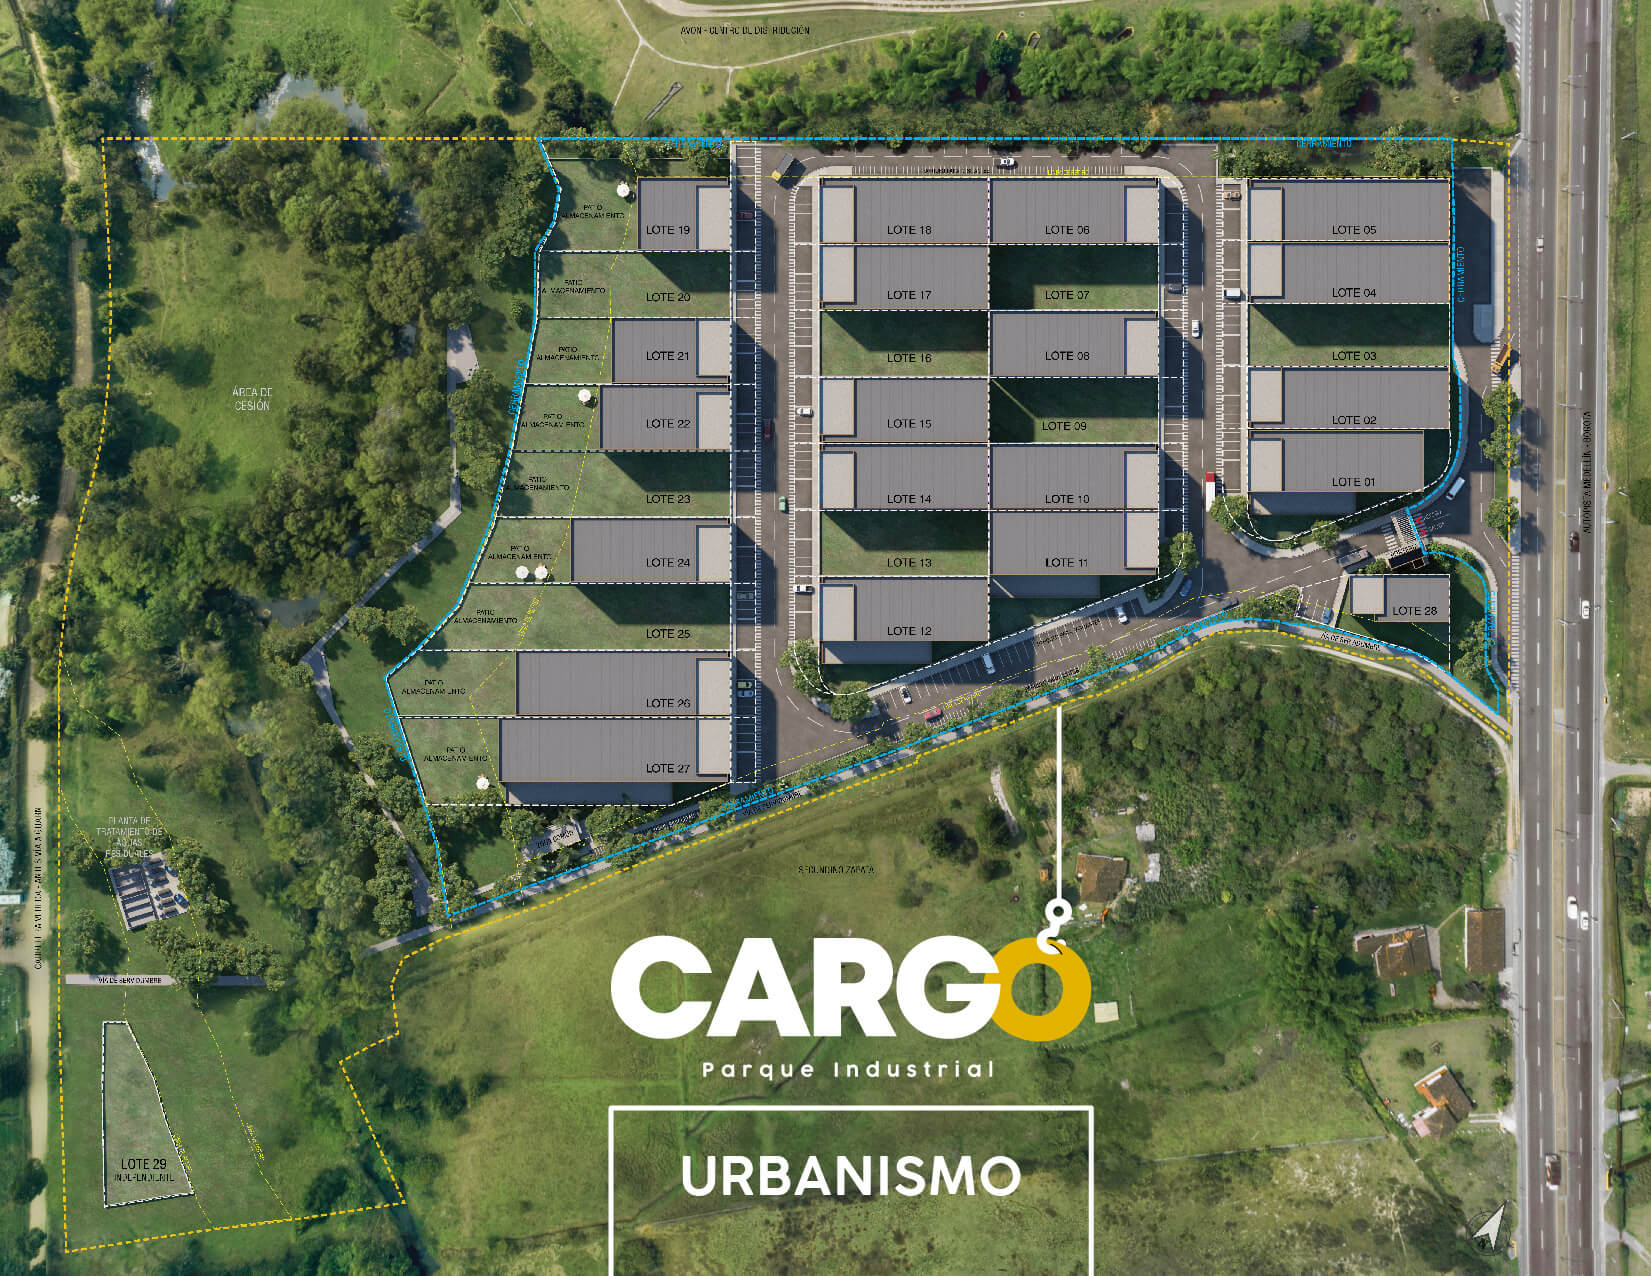 Planos urbanismo lotes industriales Cargo Parque Industrial